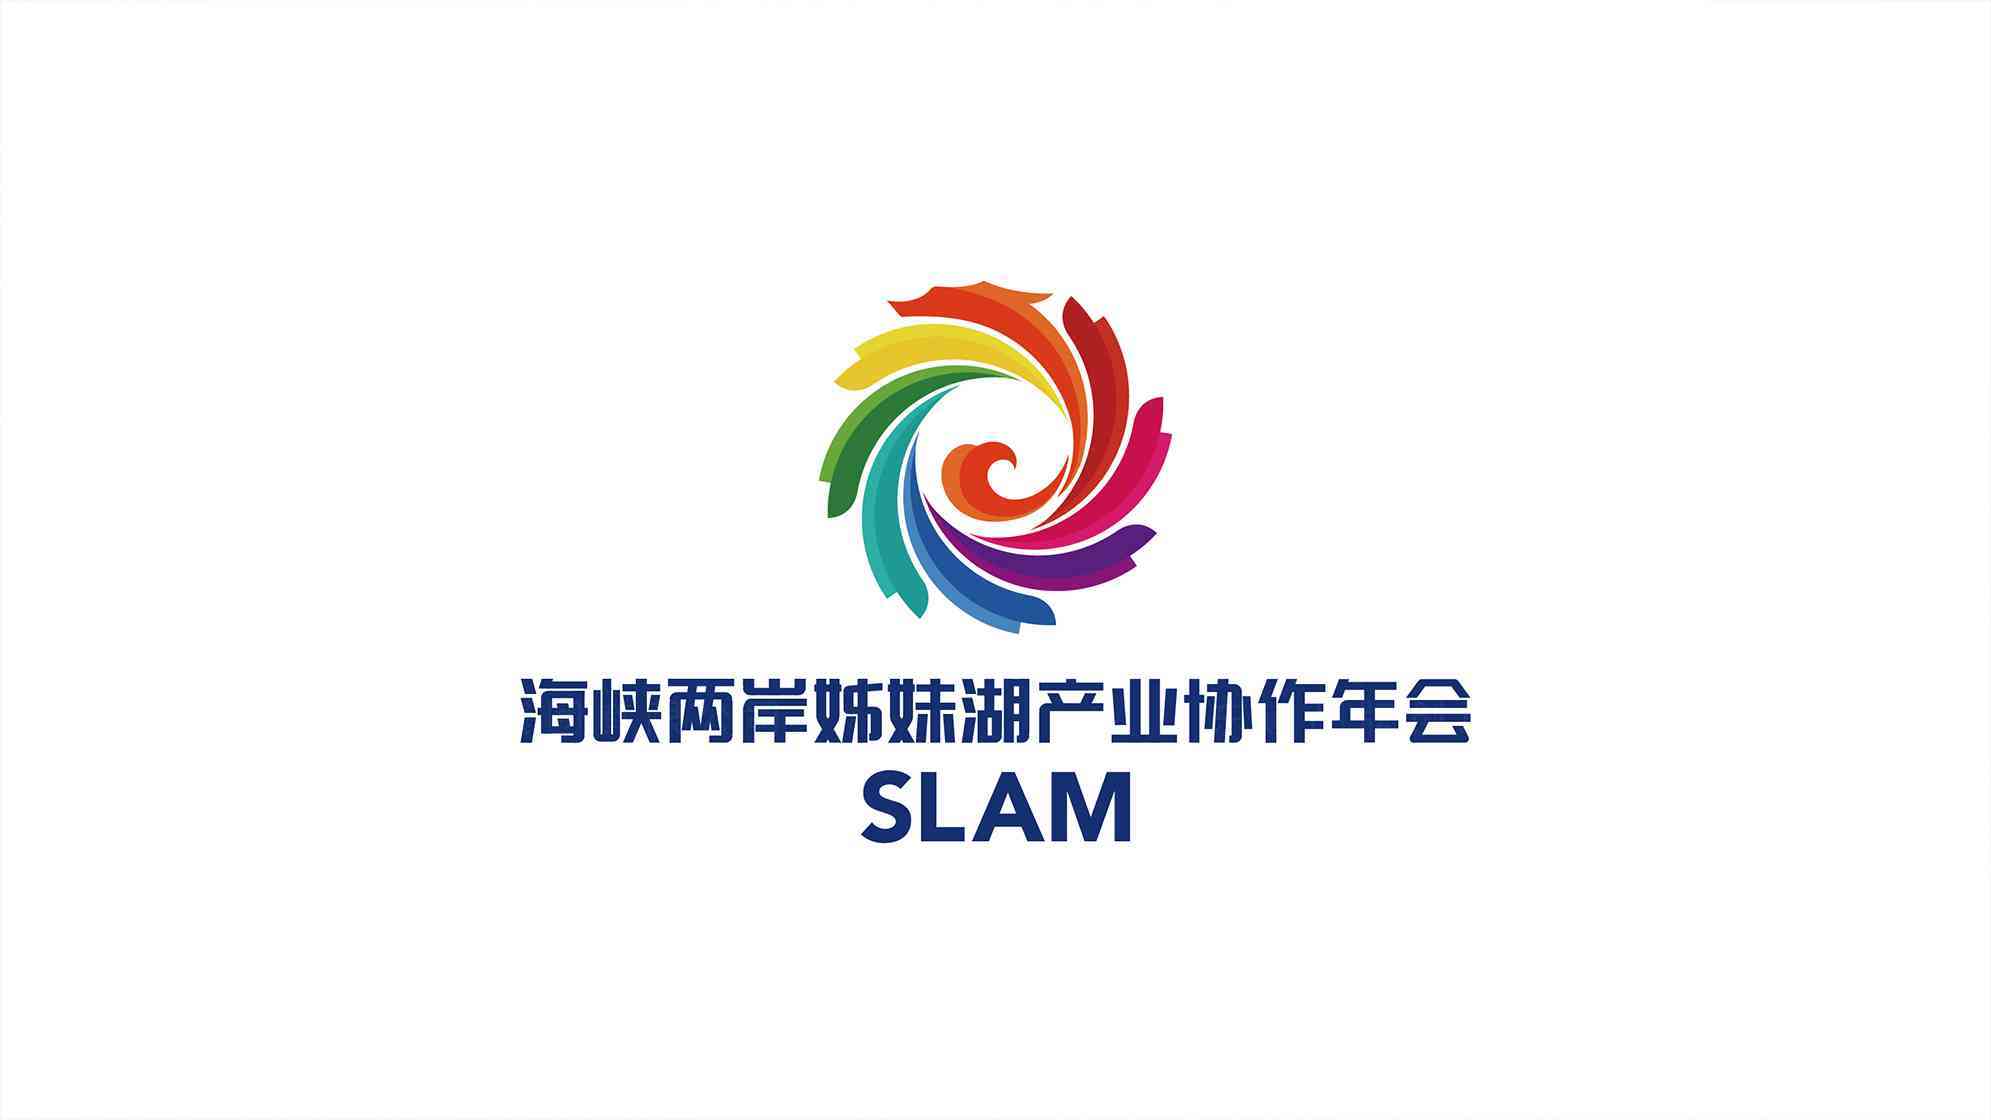 SLAM旅游行业品牌logo设计图片素材